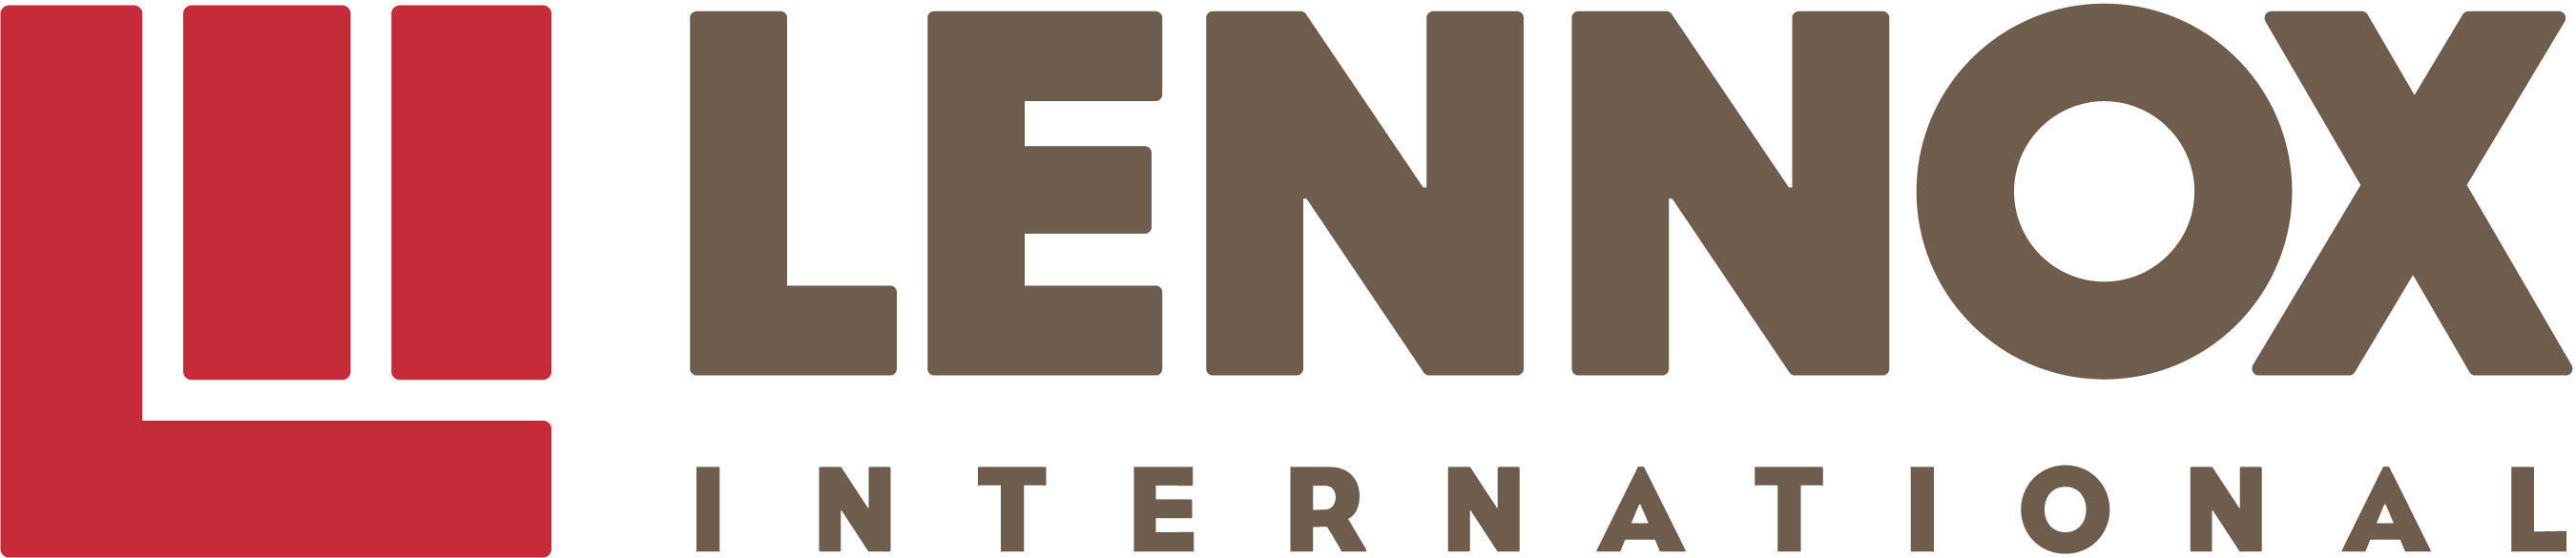 Lennox International Inc. corporate logo.